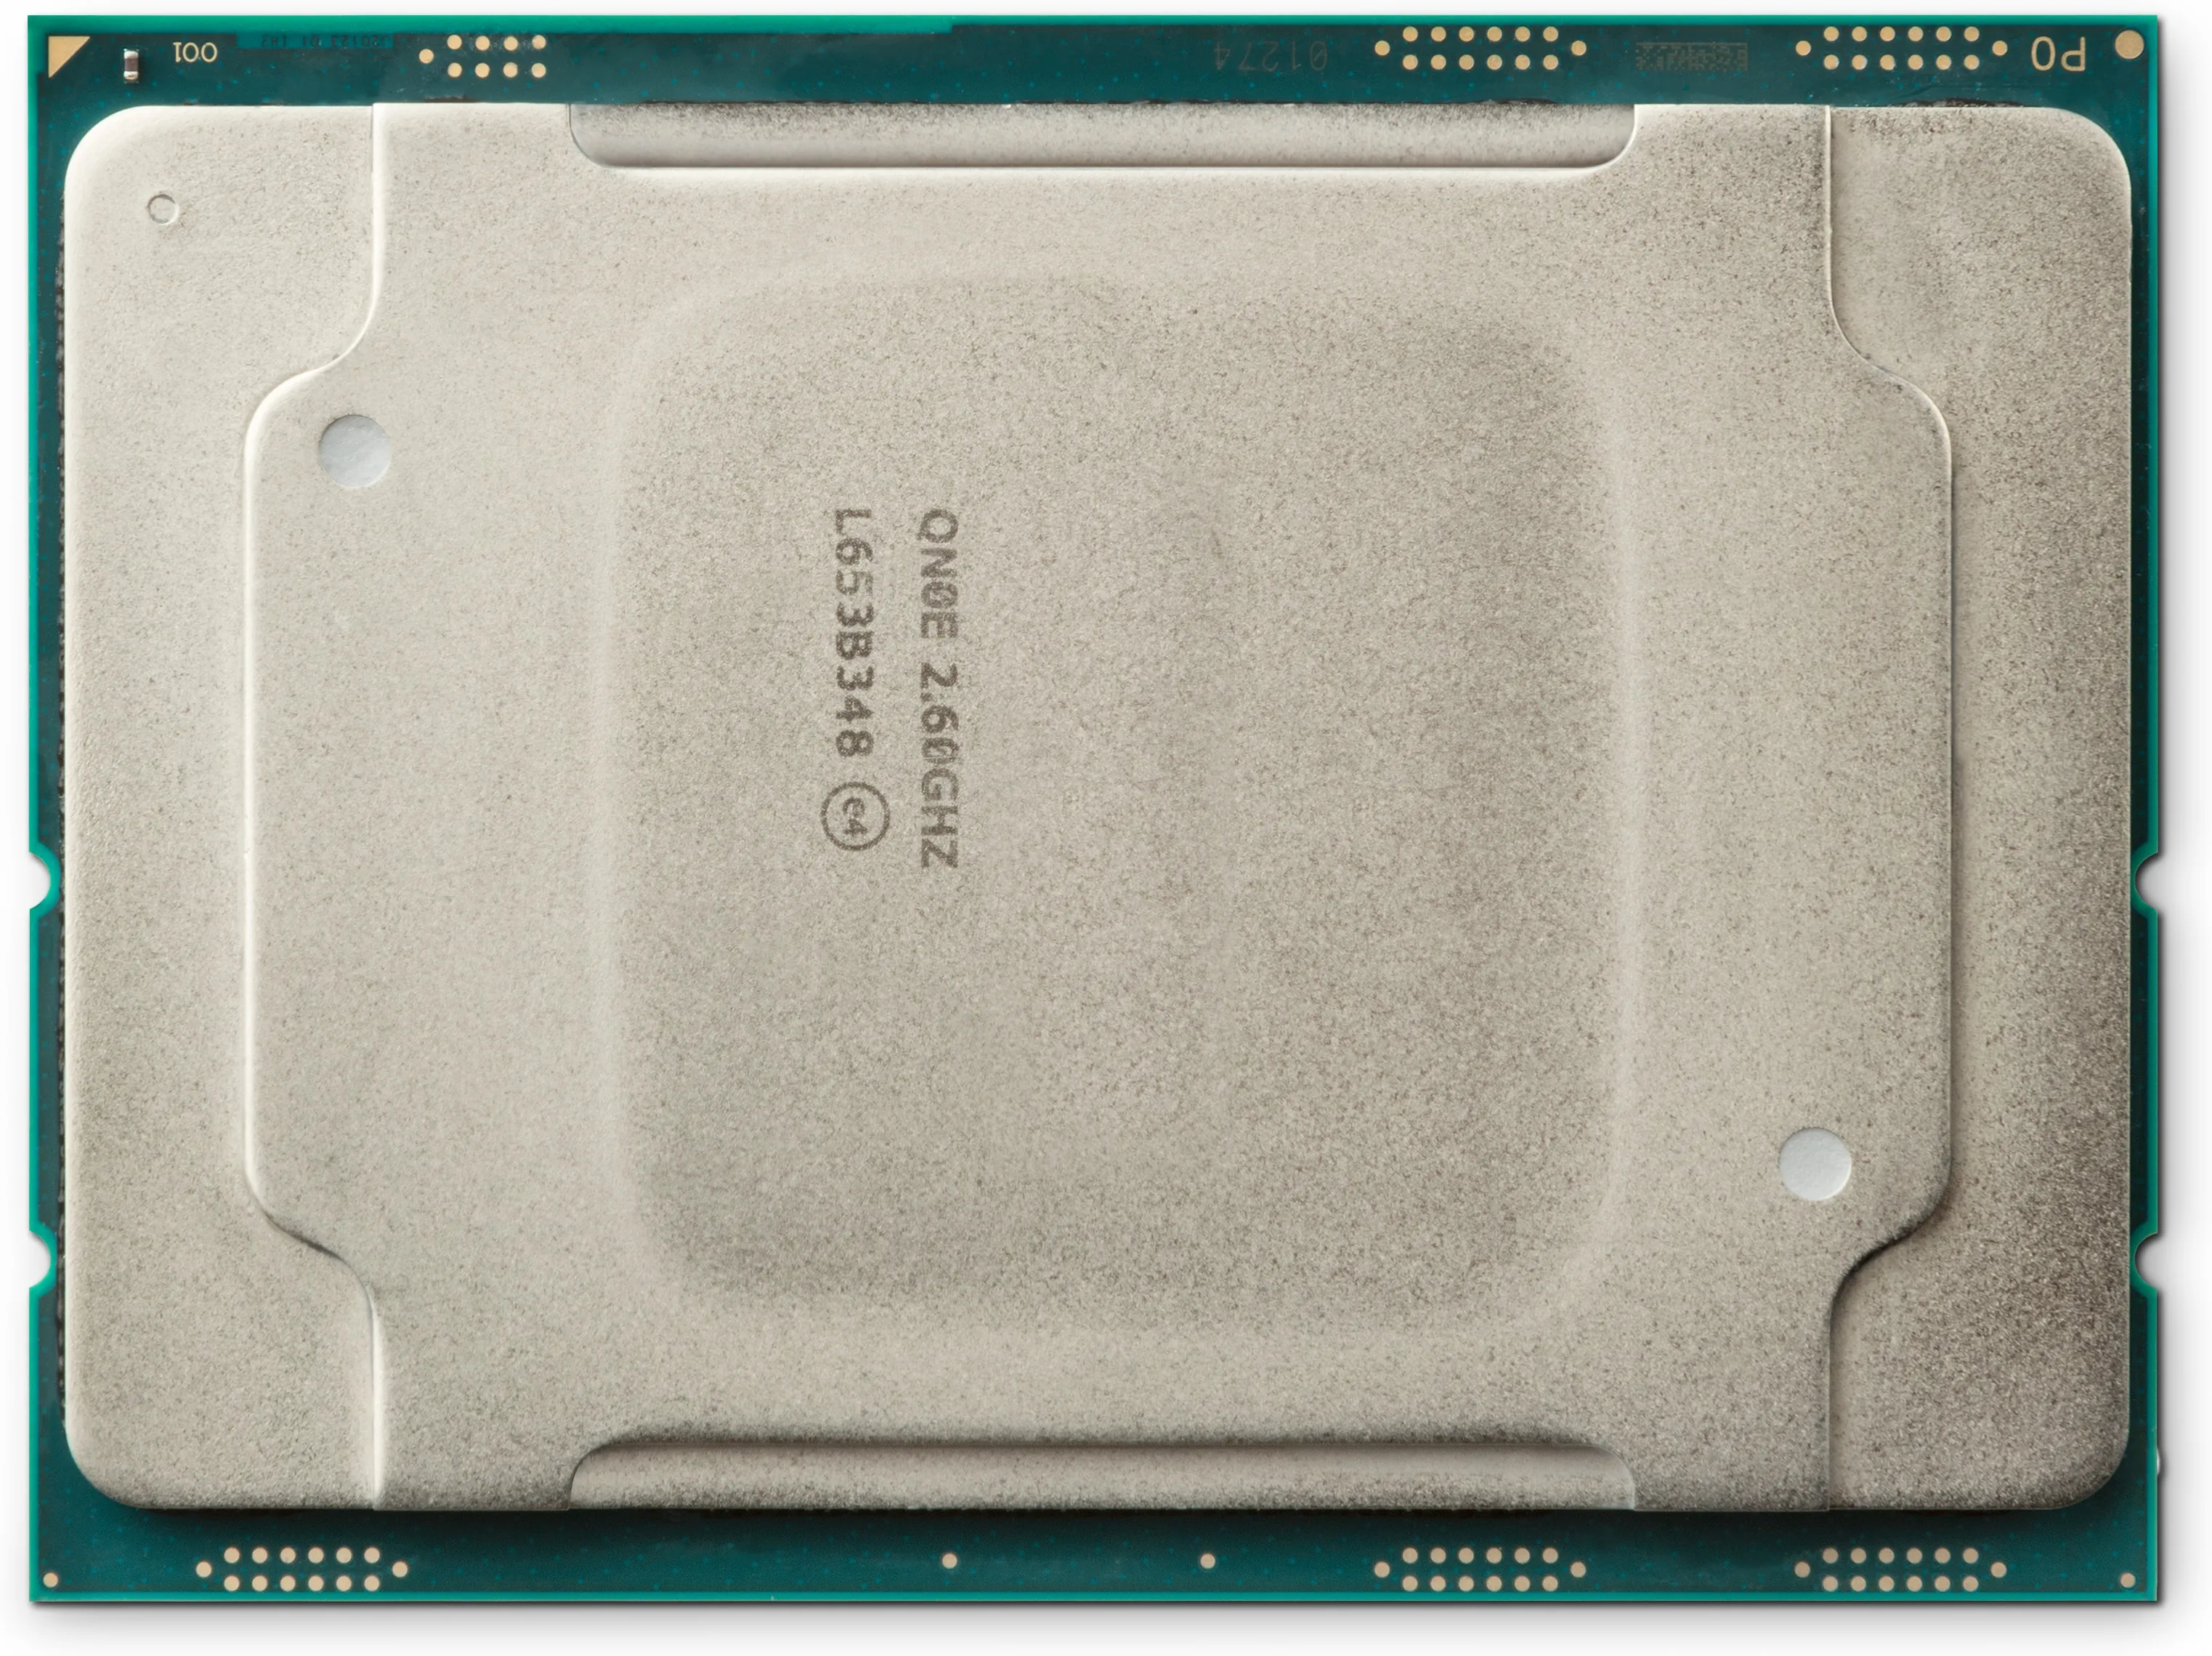 Vente HP Z6G4 Xeon 6234 3.3 2933 8C 130W HP au meilleur prix - visuel 4